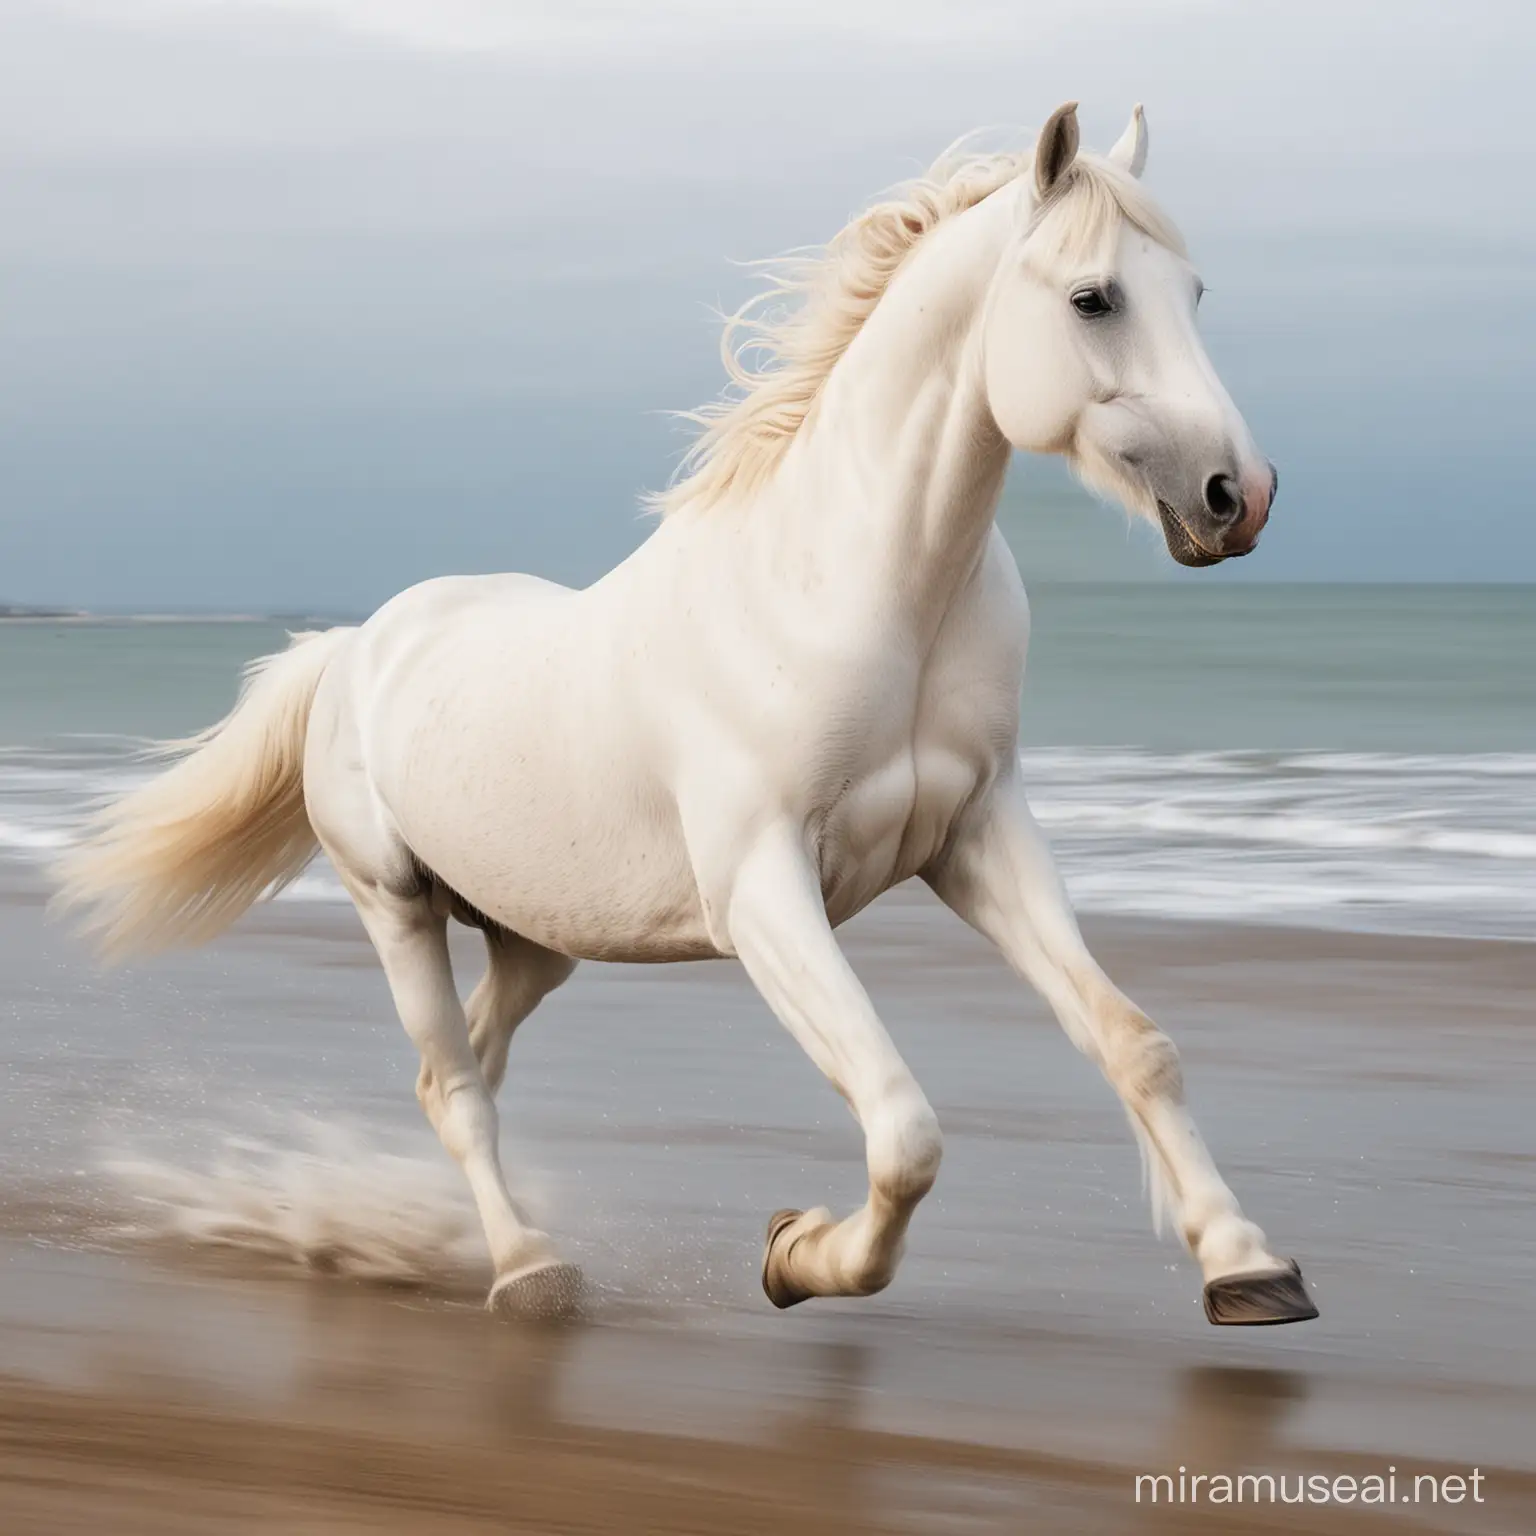 Graceful White Horse Running on Sandy Beach at Sunset